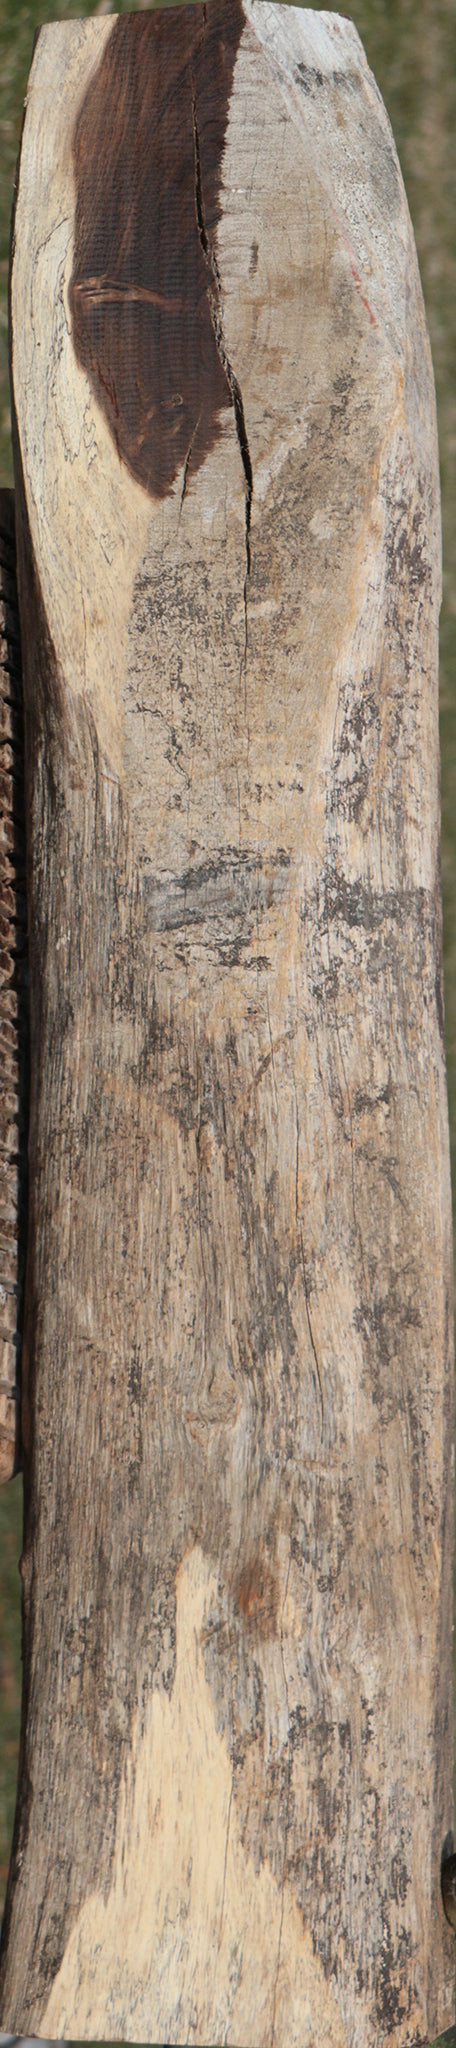 Rustic Leadwood Live Edge Lumber